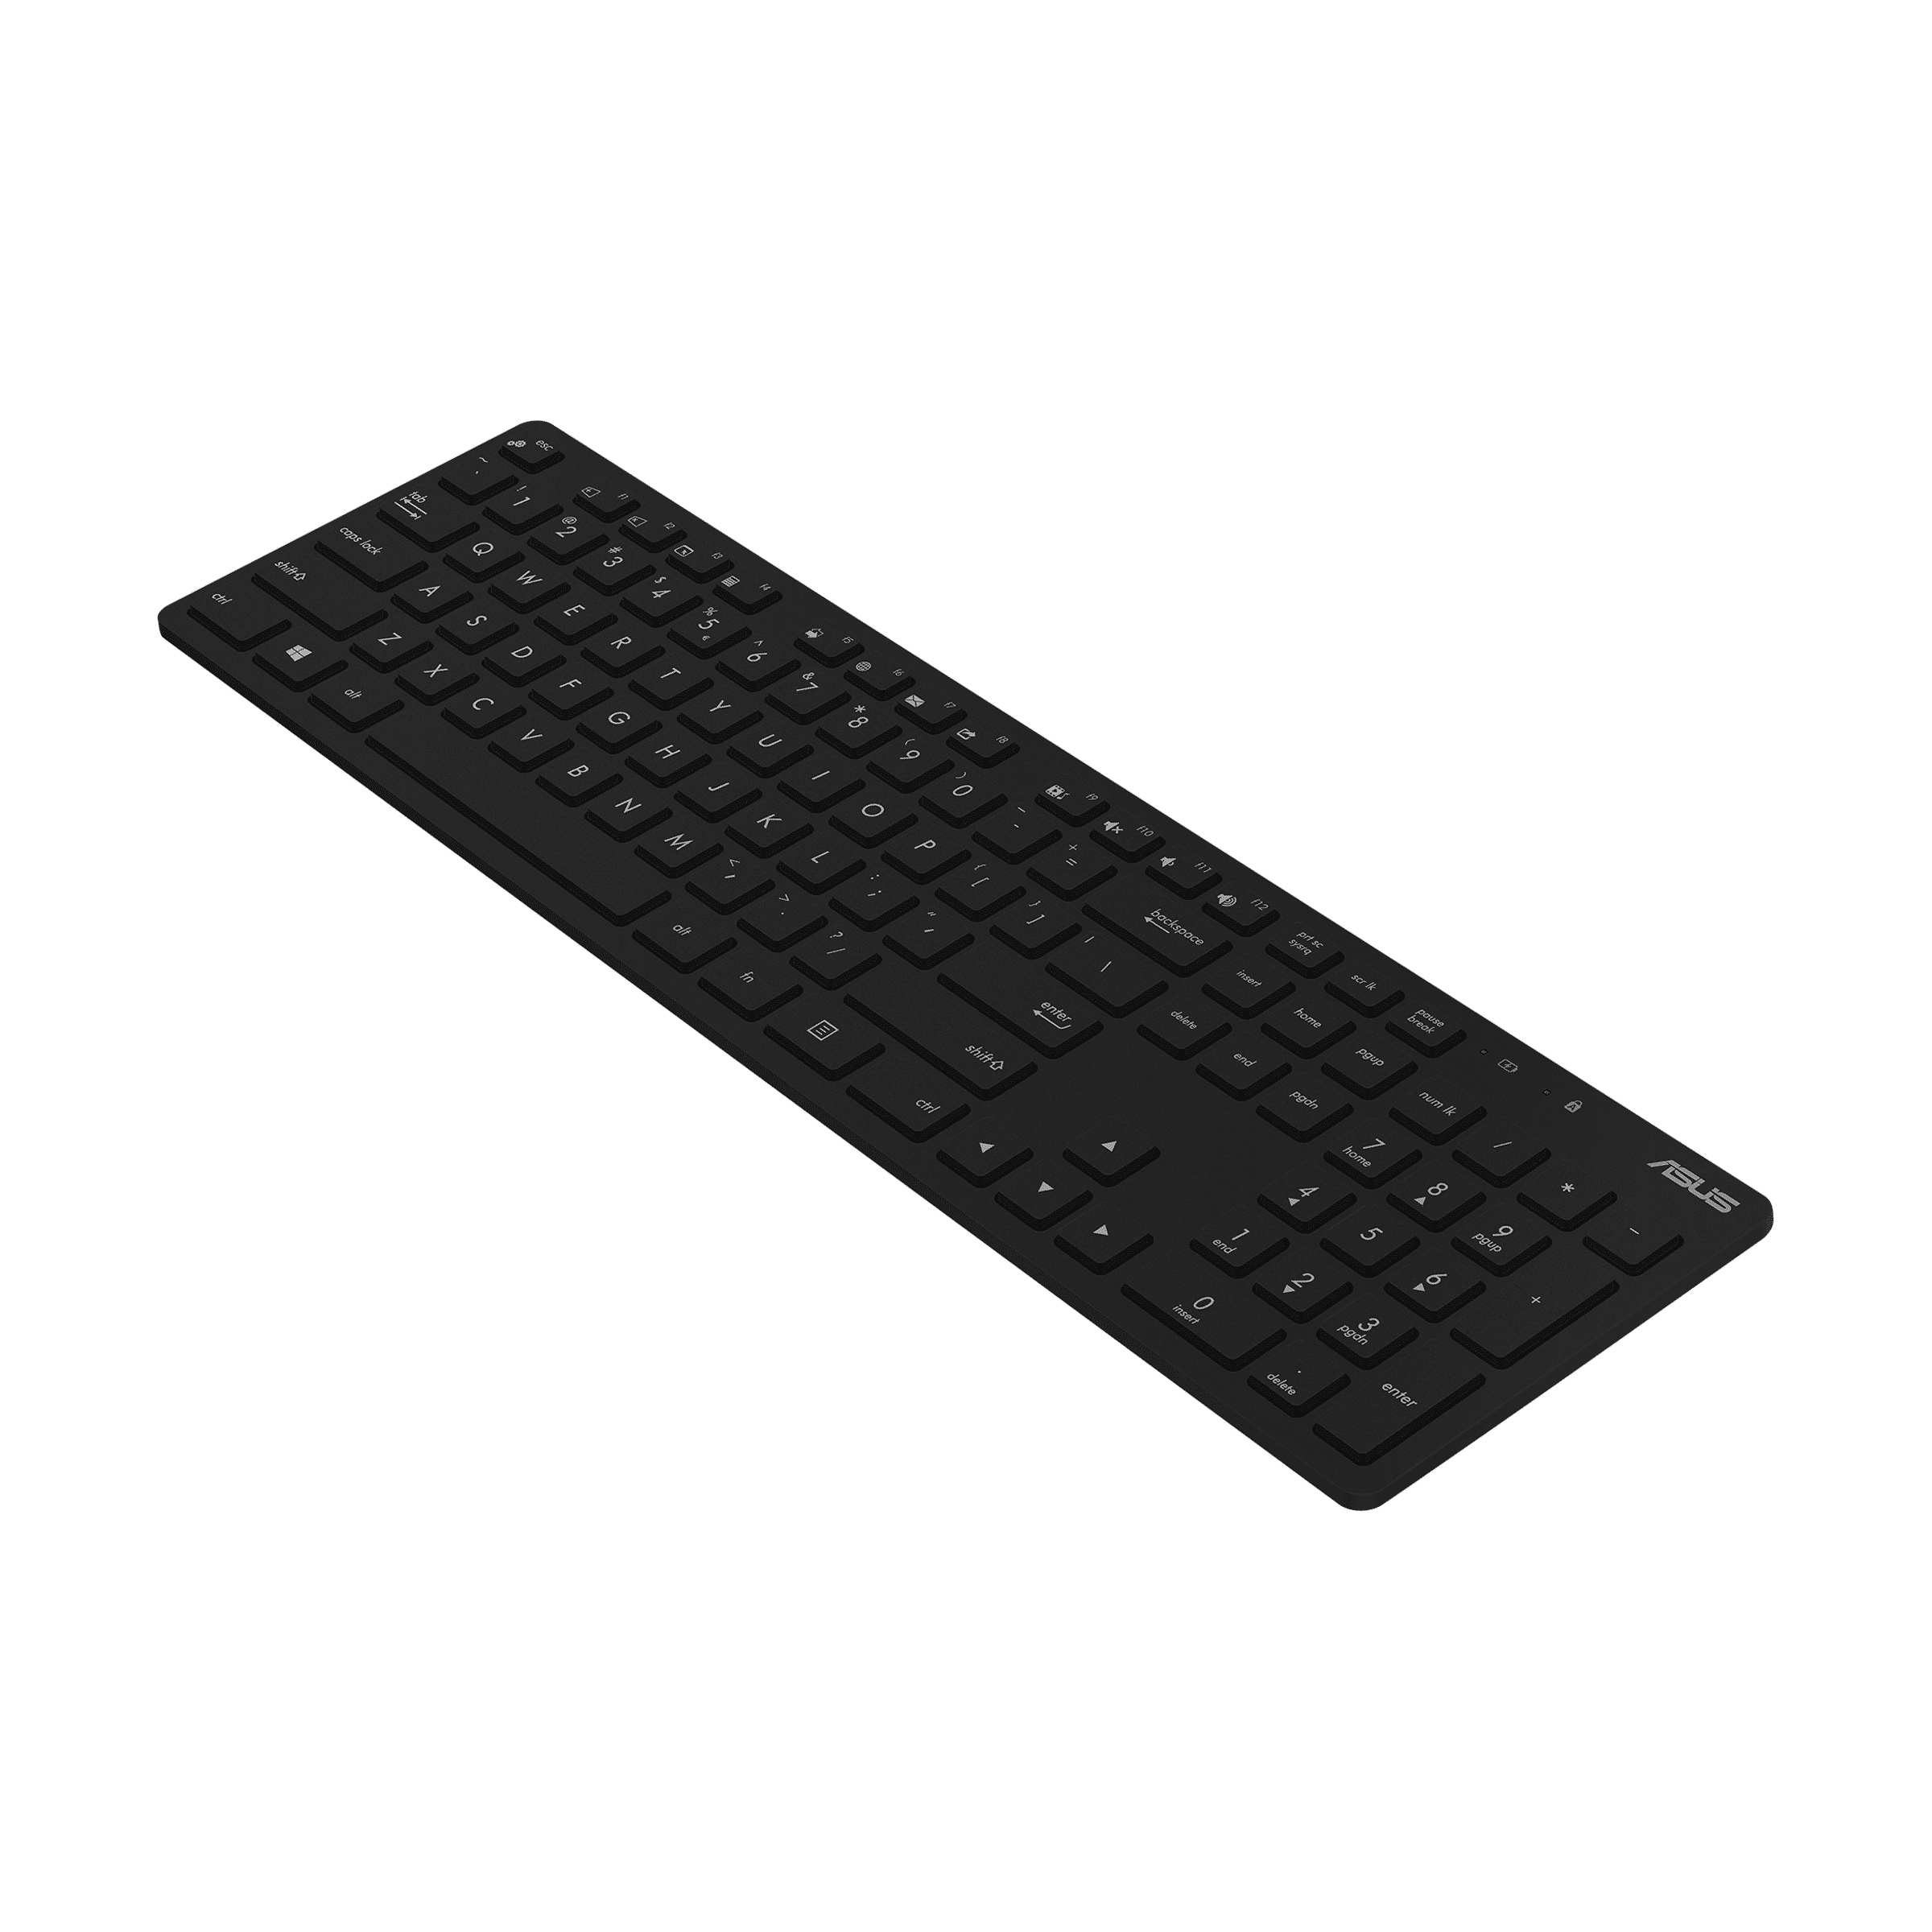 ASUS W5000 Wireless Keyboard and Set｜Keyboards｜ASUS Global